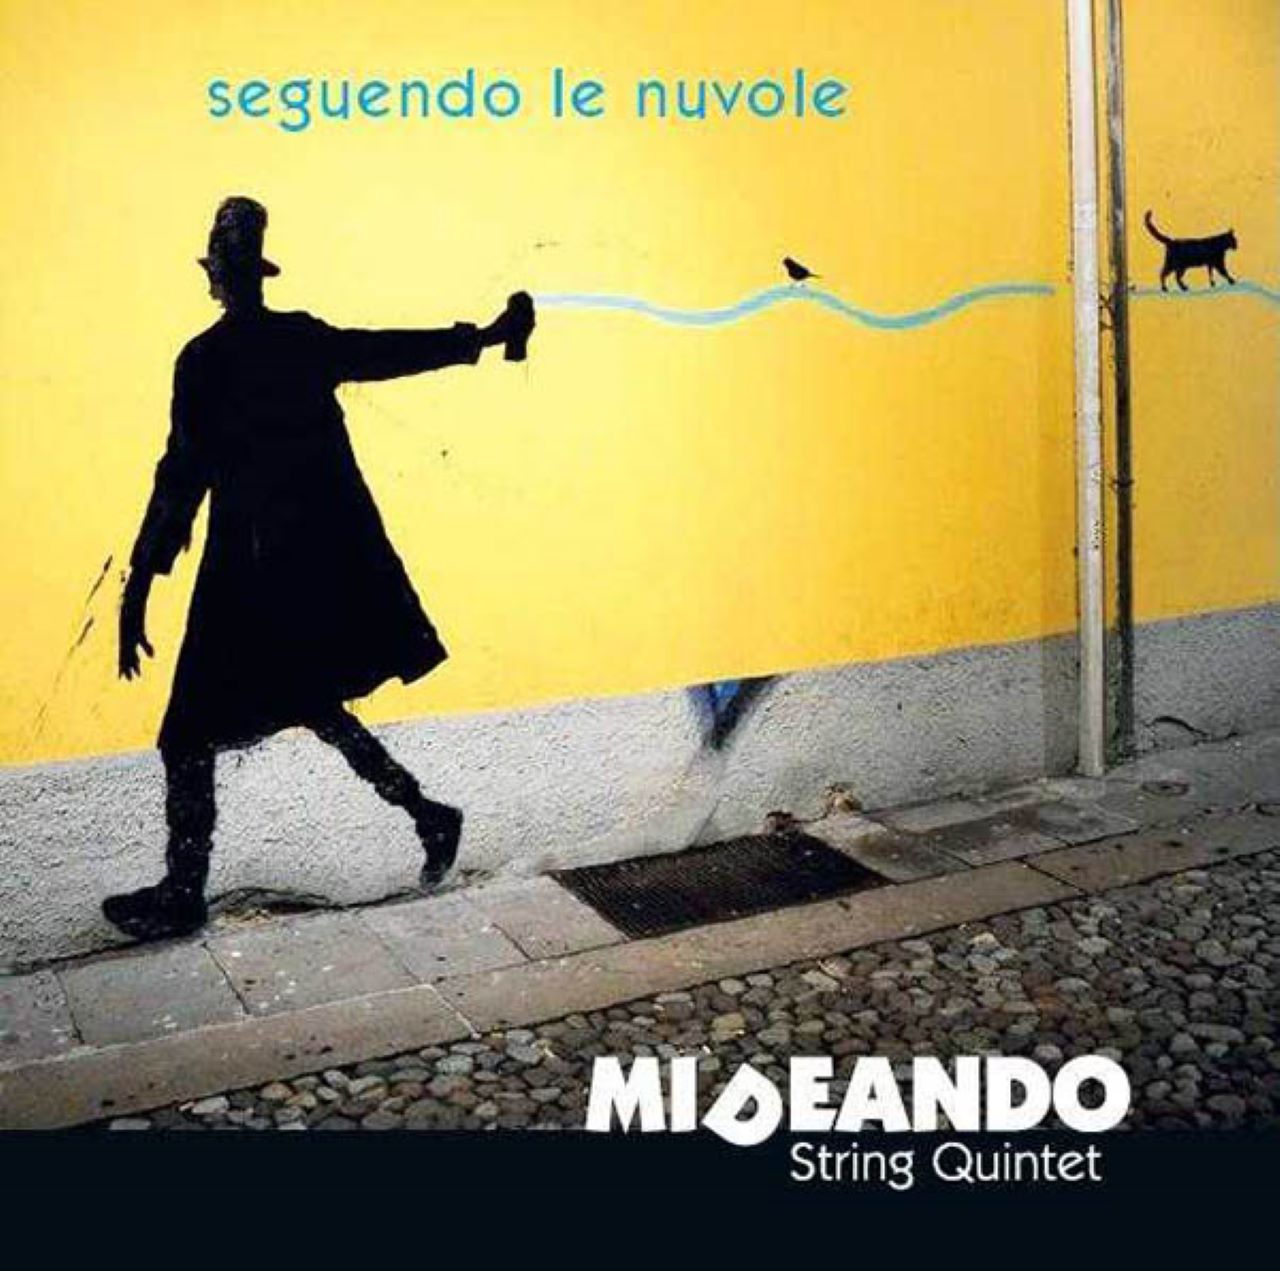 Mideando String Quintet - Seguendo Le Nuvole cover album